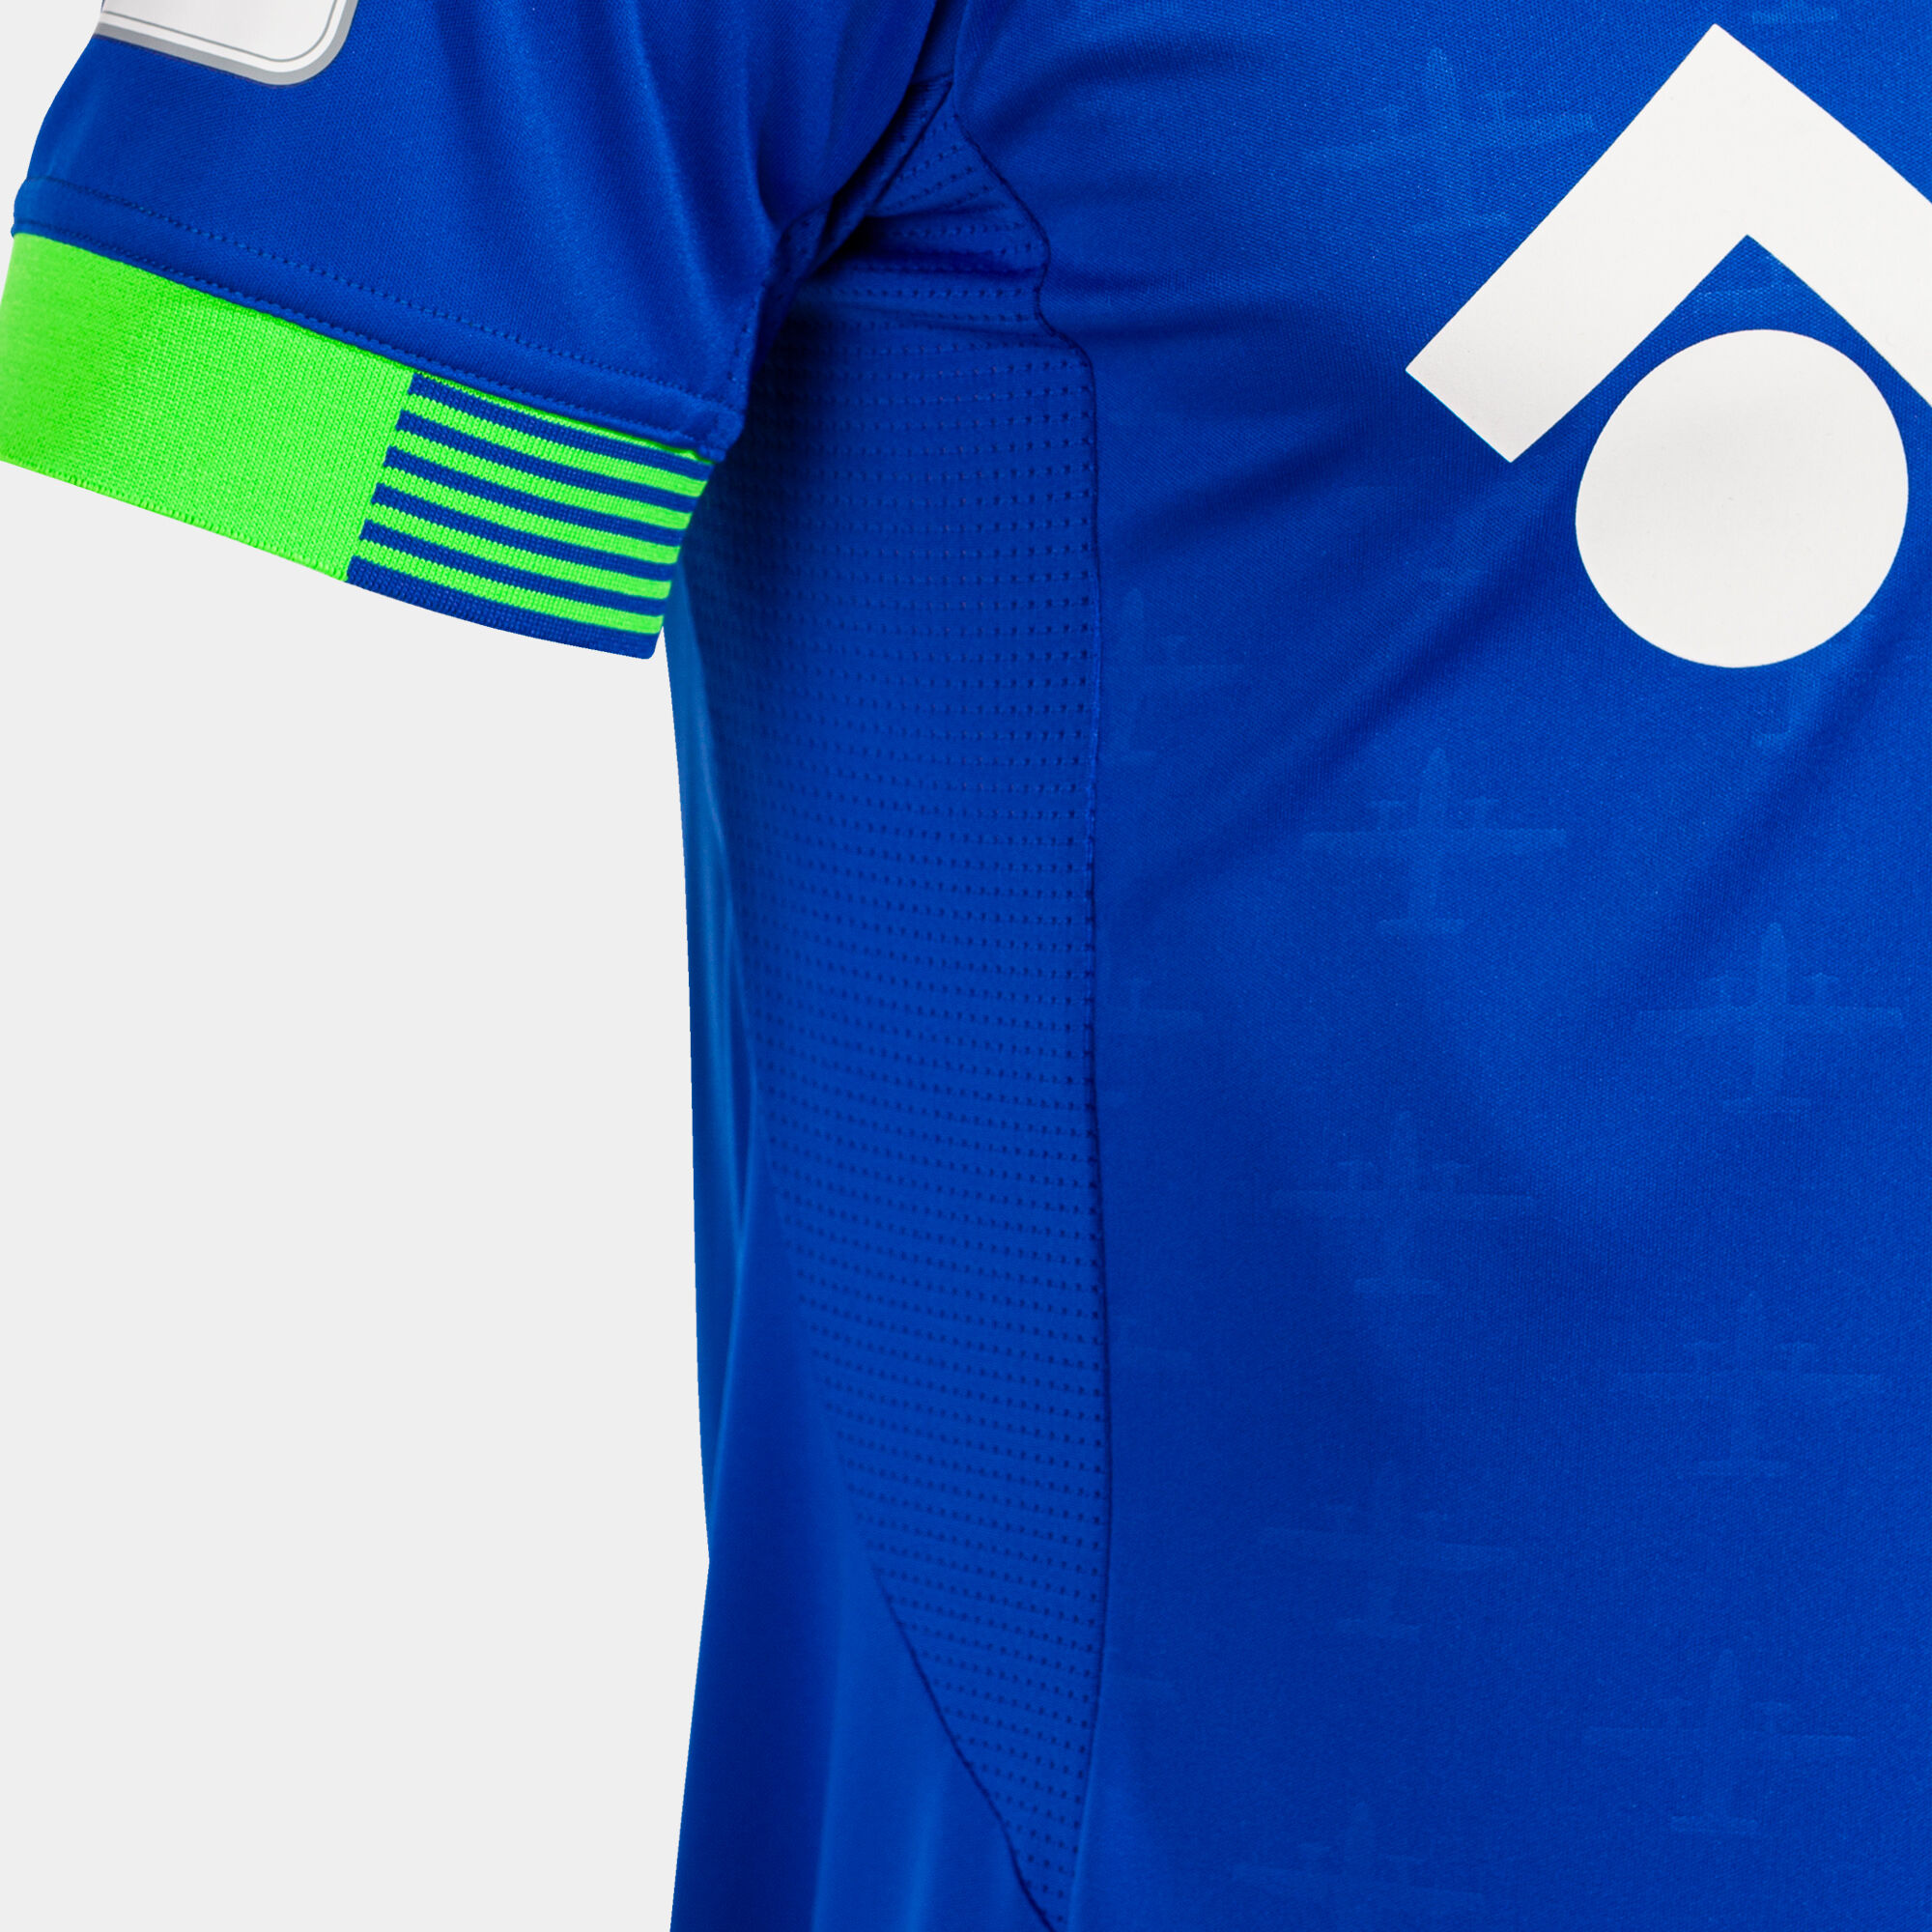 Joma Tercer Niño De Camiseta Torino Fc 2021/22 Azul